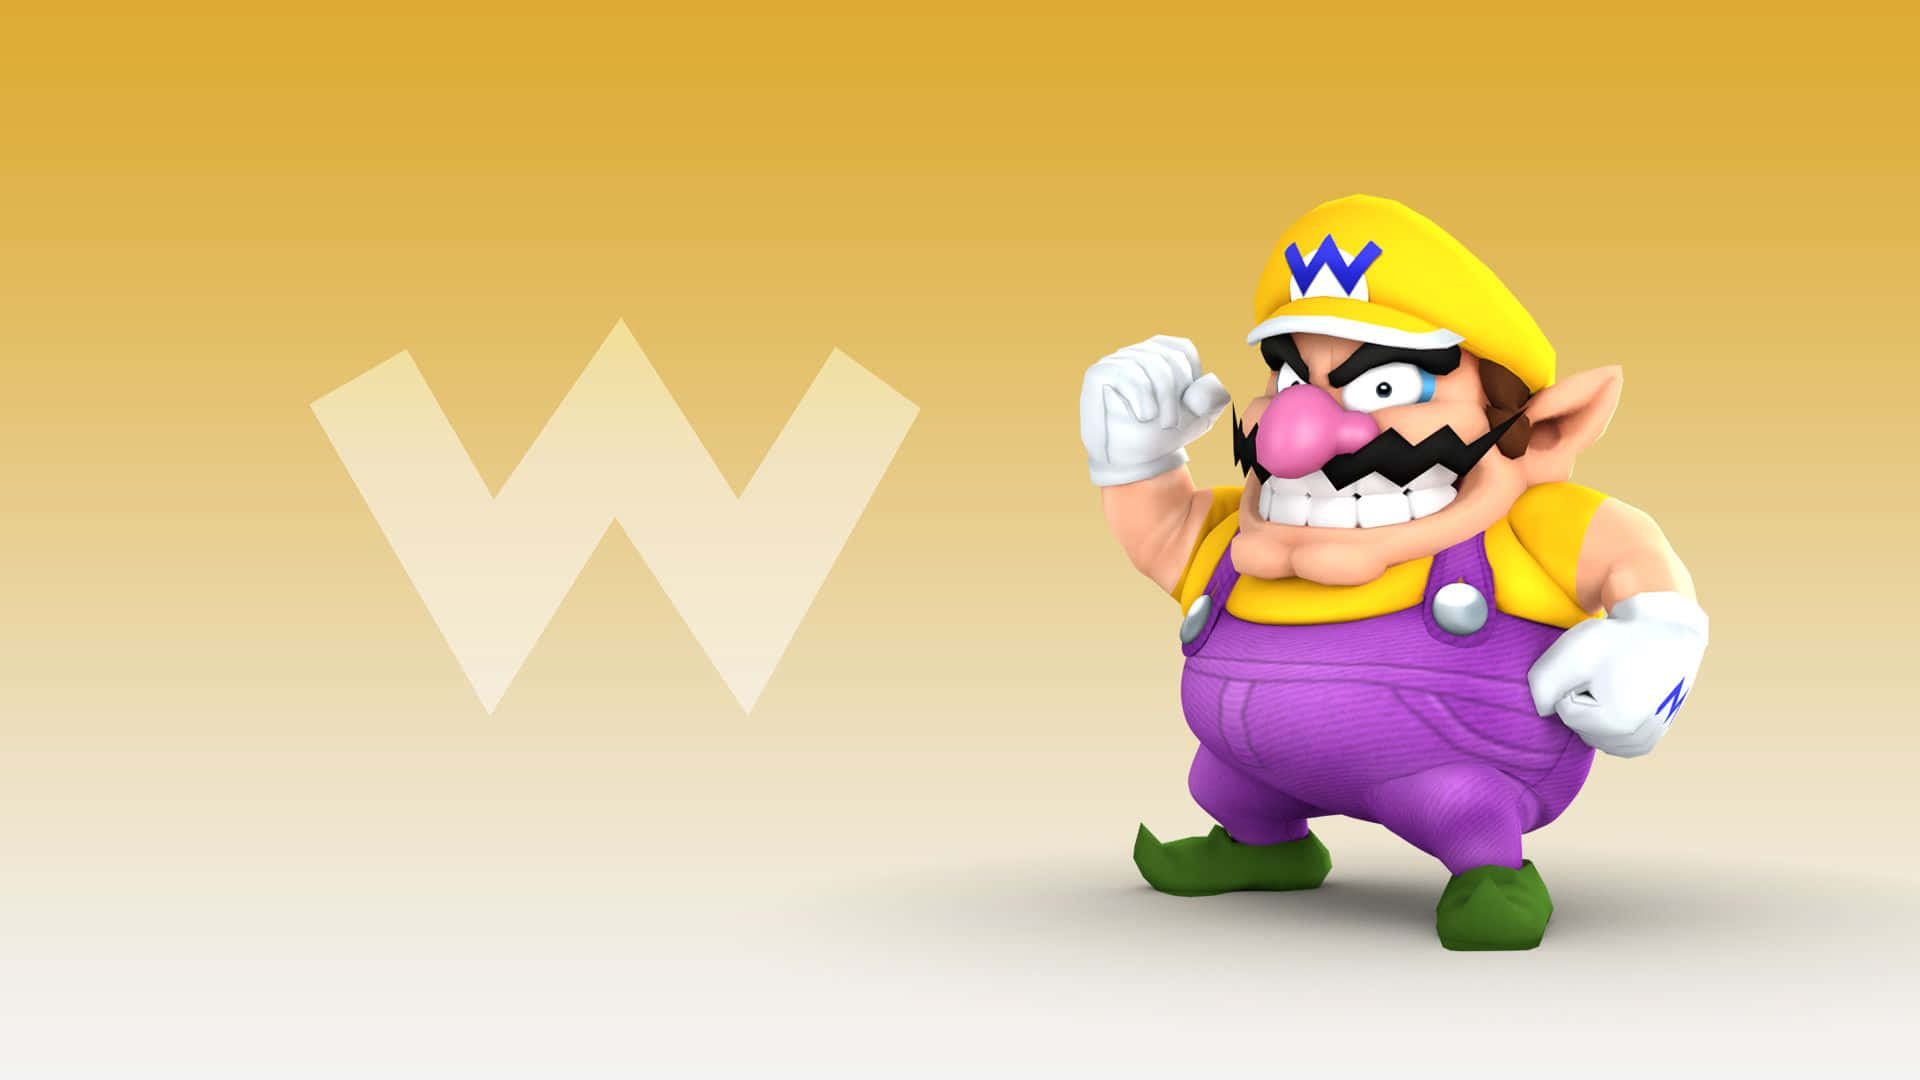 Wario striking a pose in the world of Super Mario Wallpaper